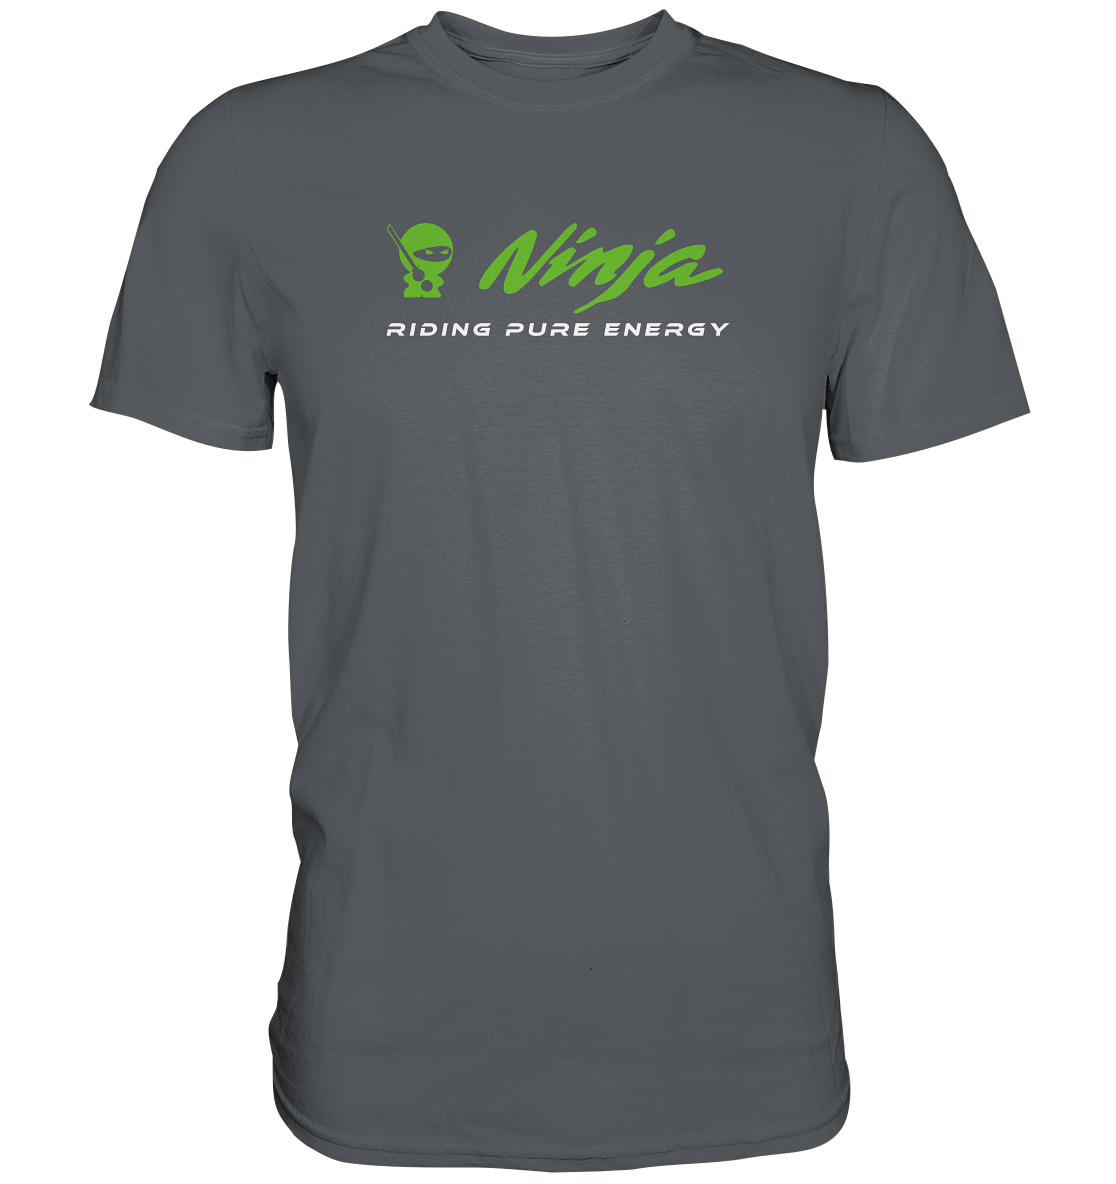 Ninja - riding pure energy - dunkle Shirtfarben  - Premium unisex Shirt